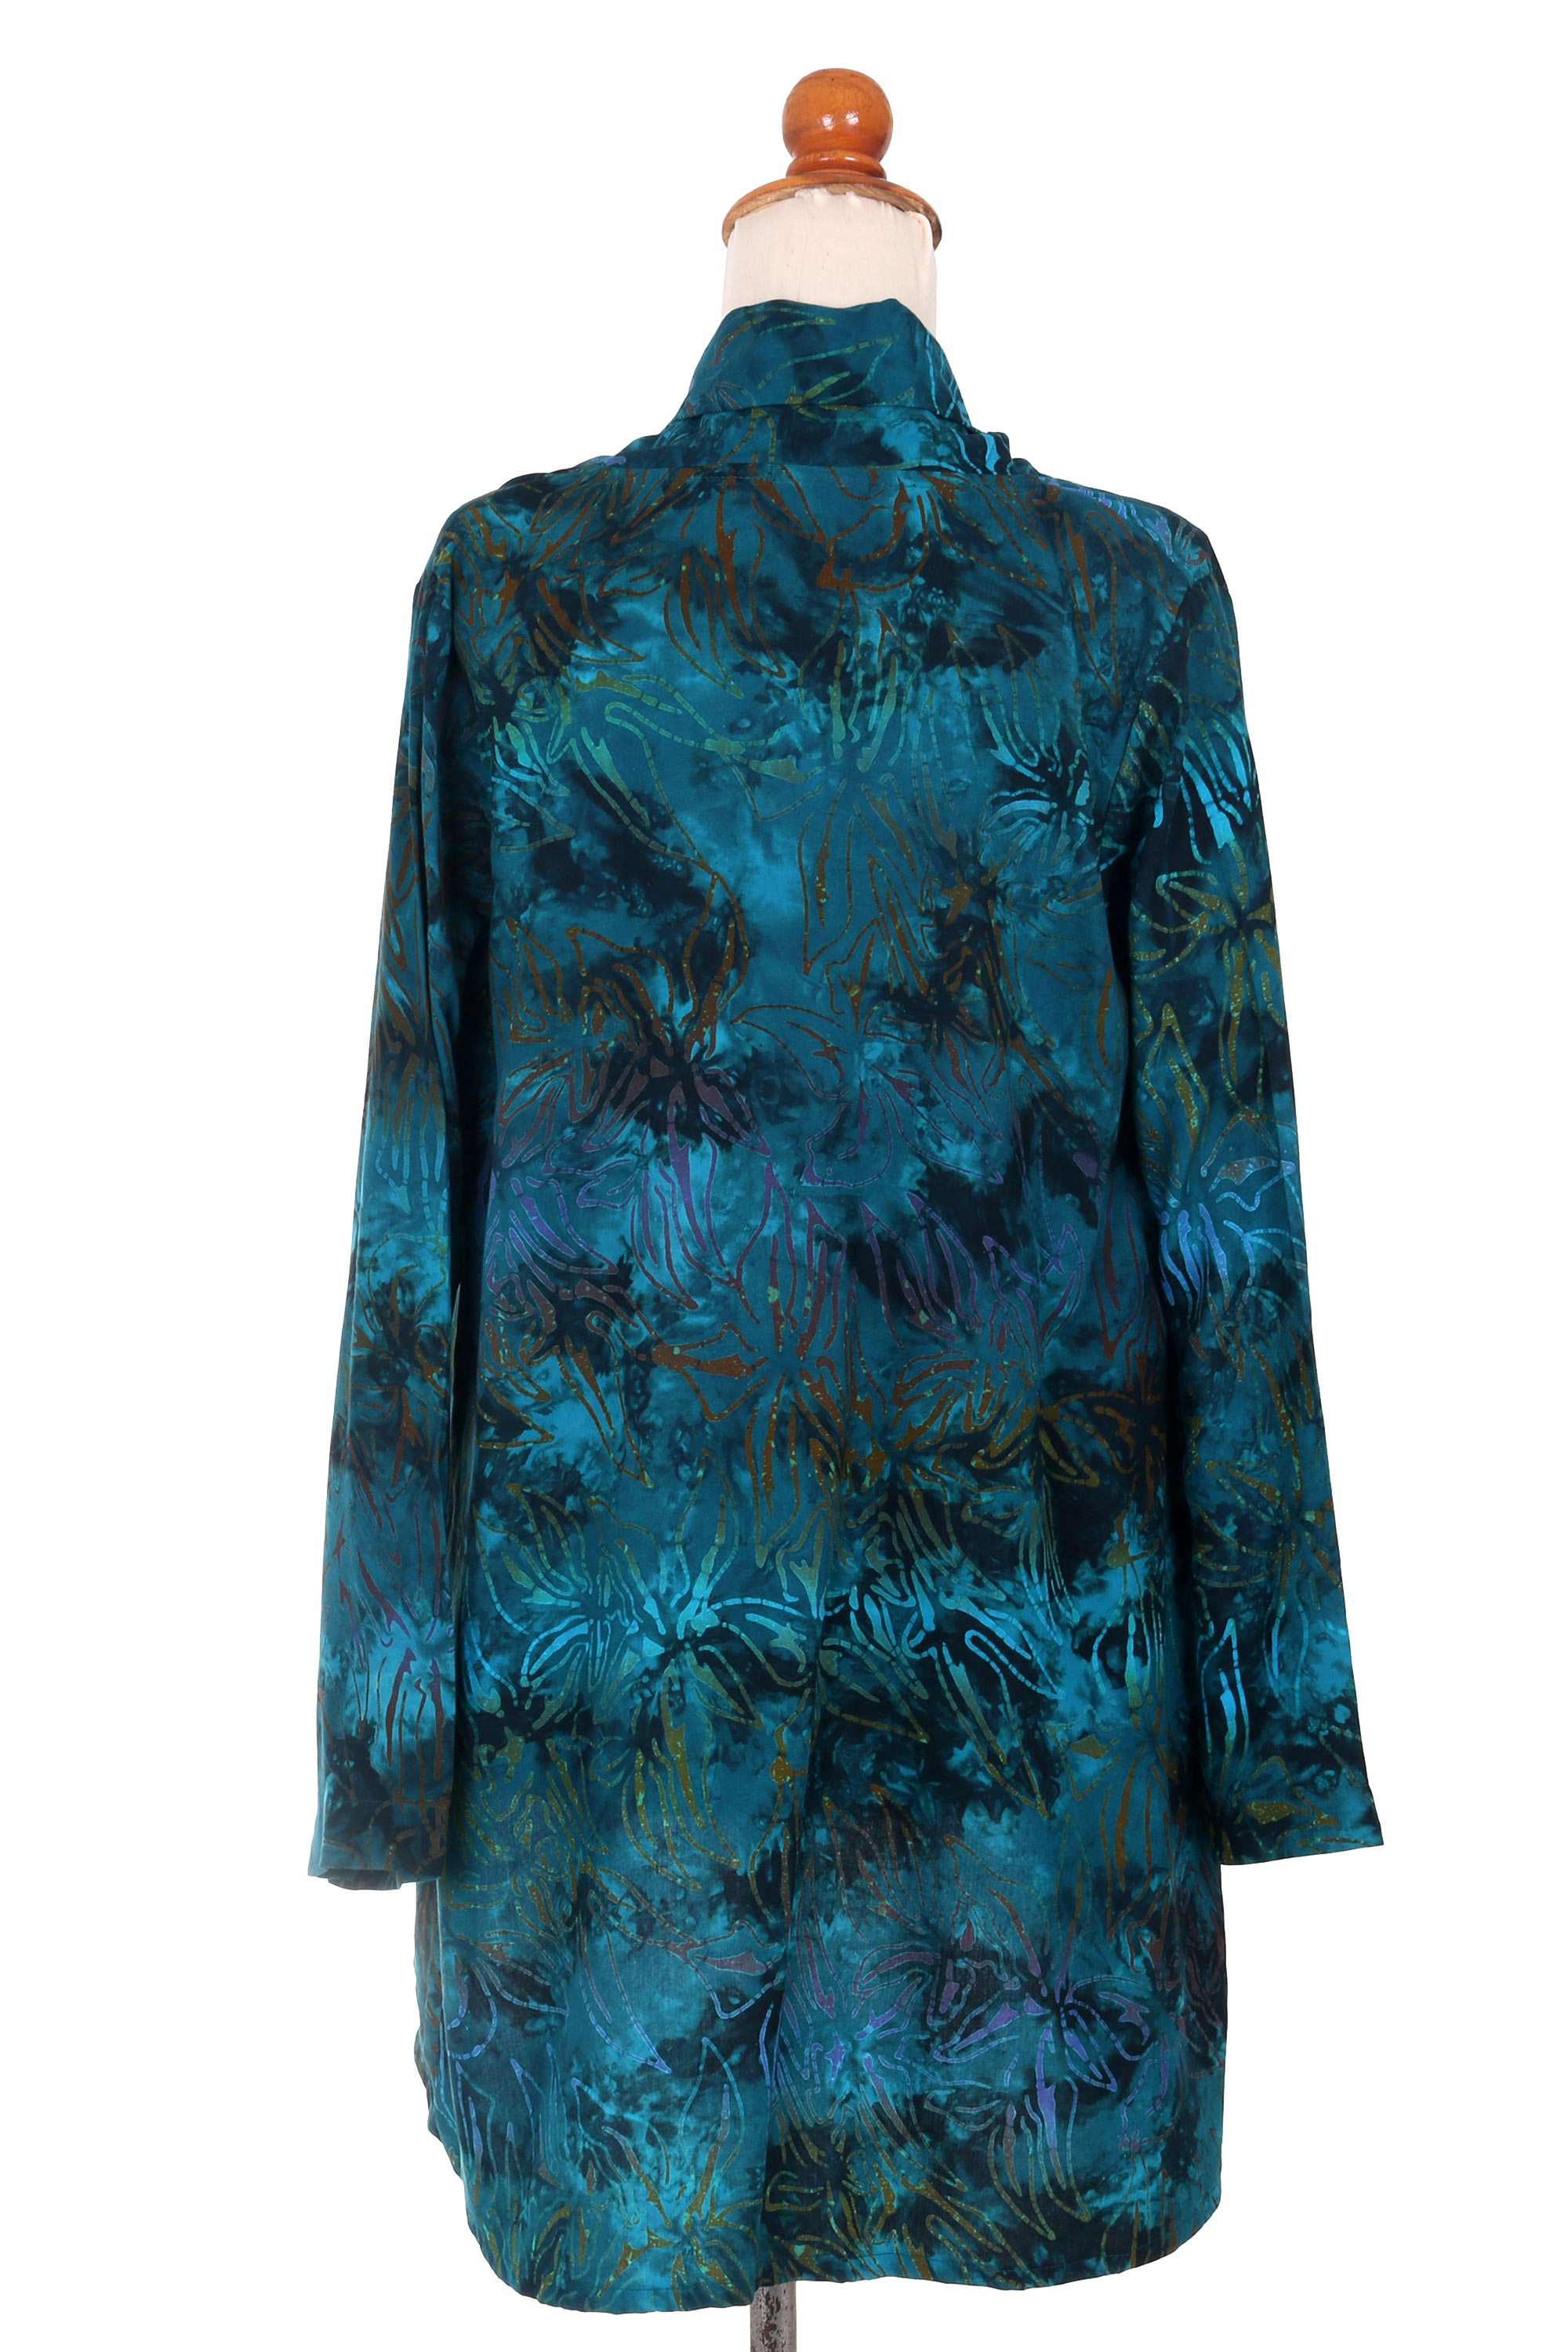 Long Sleeve Women's Rayon Jacket with Teal Floral Print - Kenanga | NOVICA